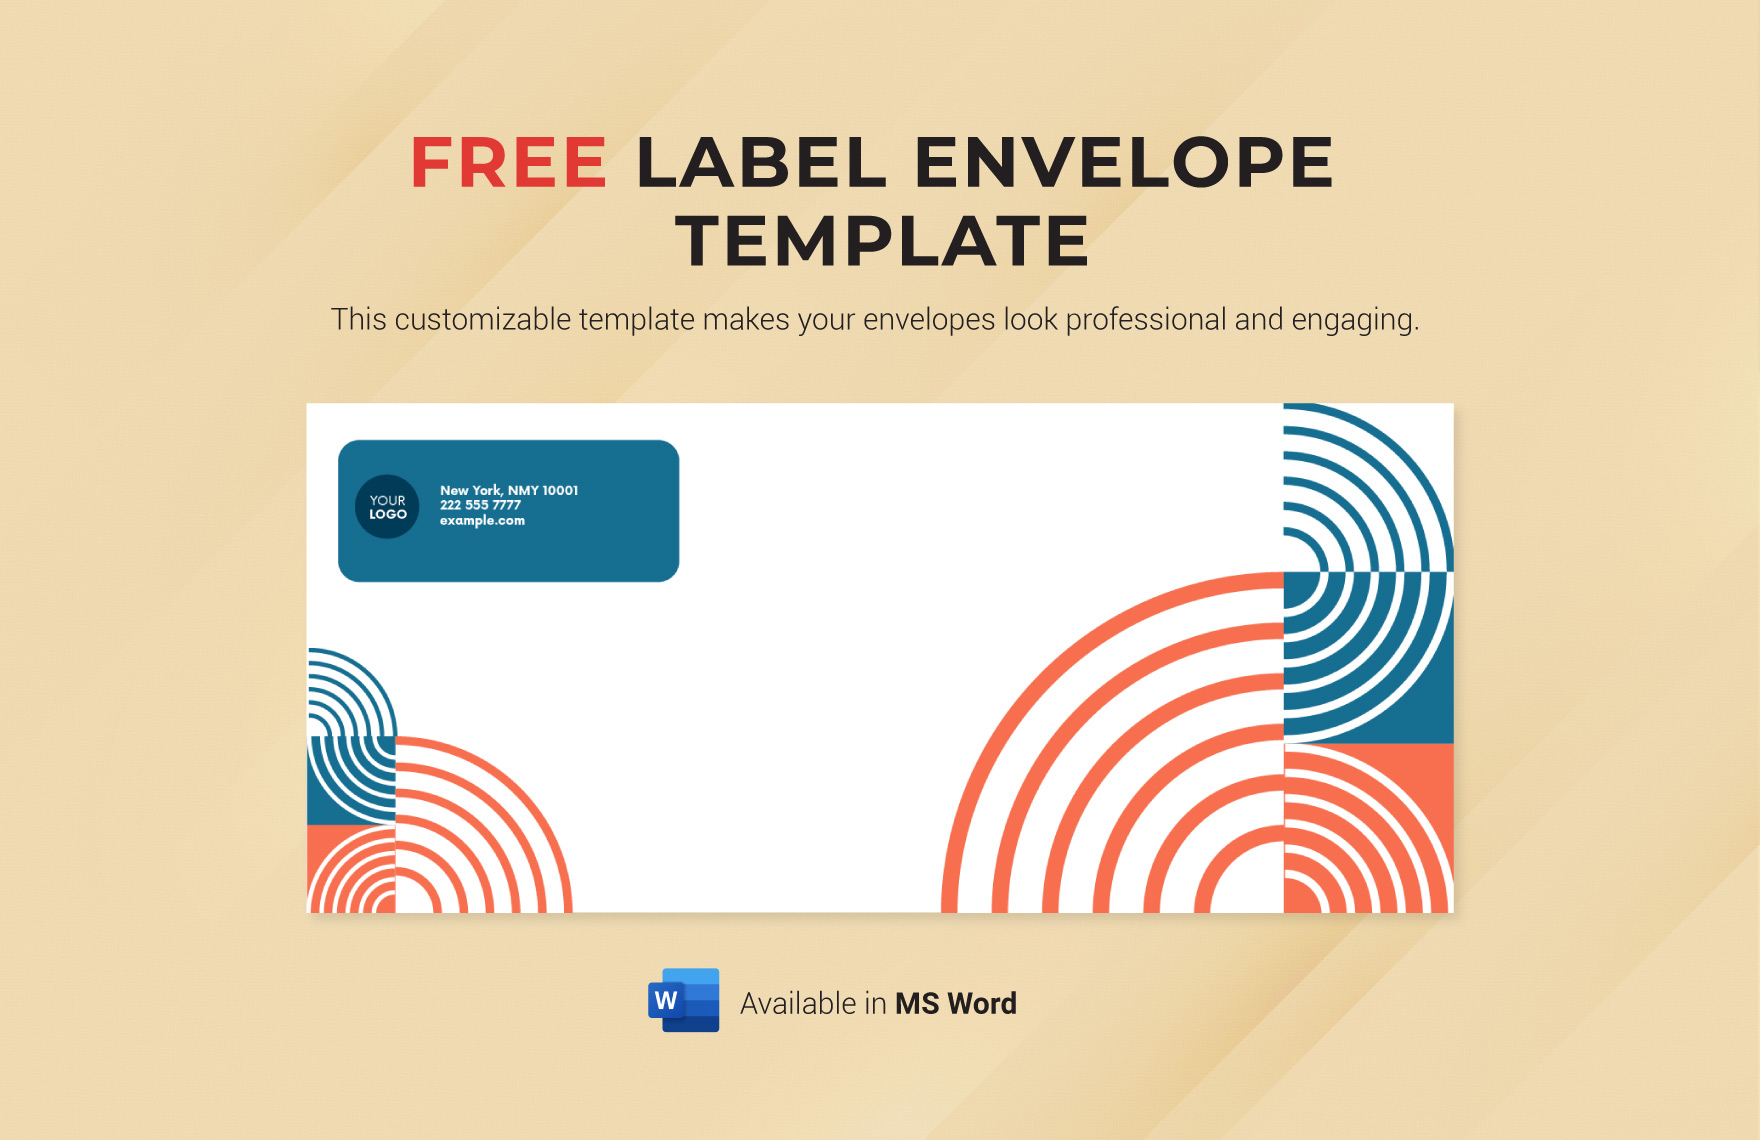 Label Envelope Template